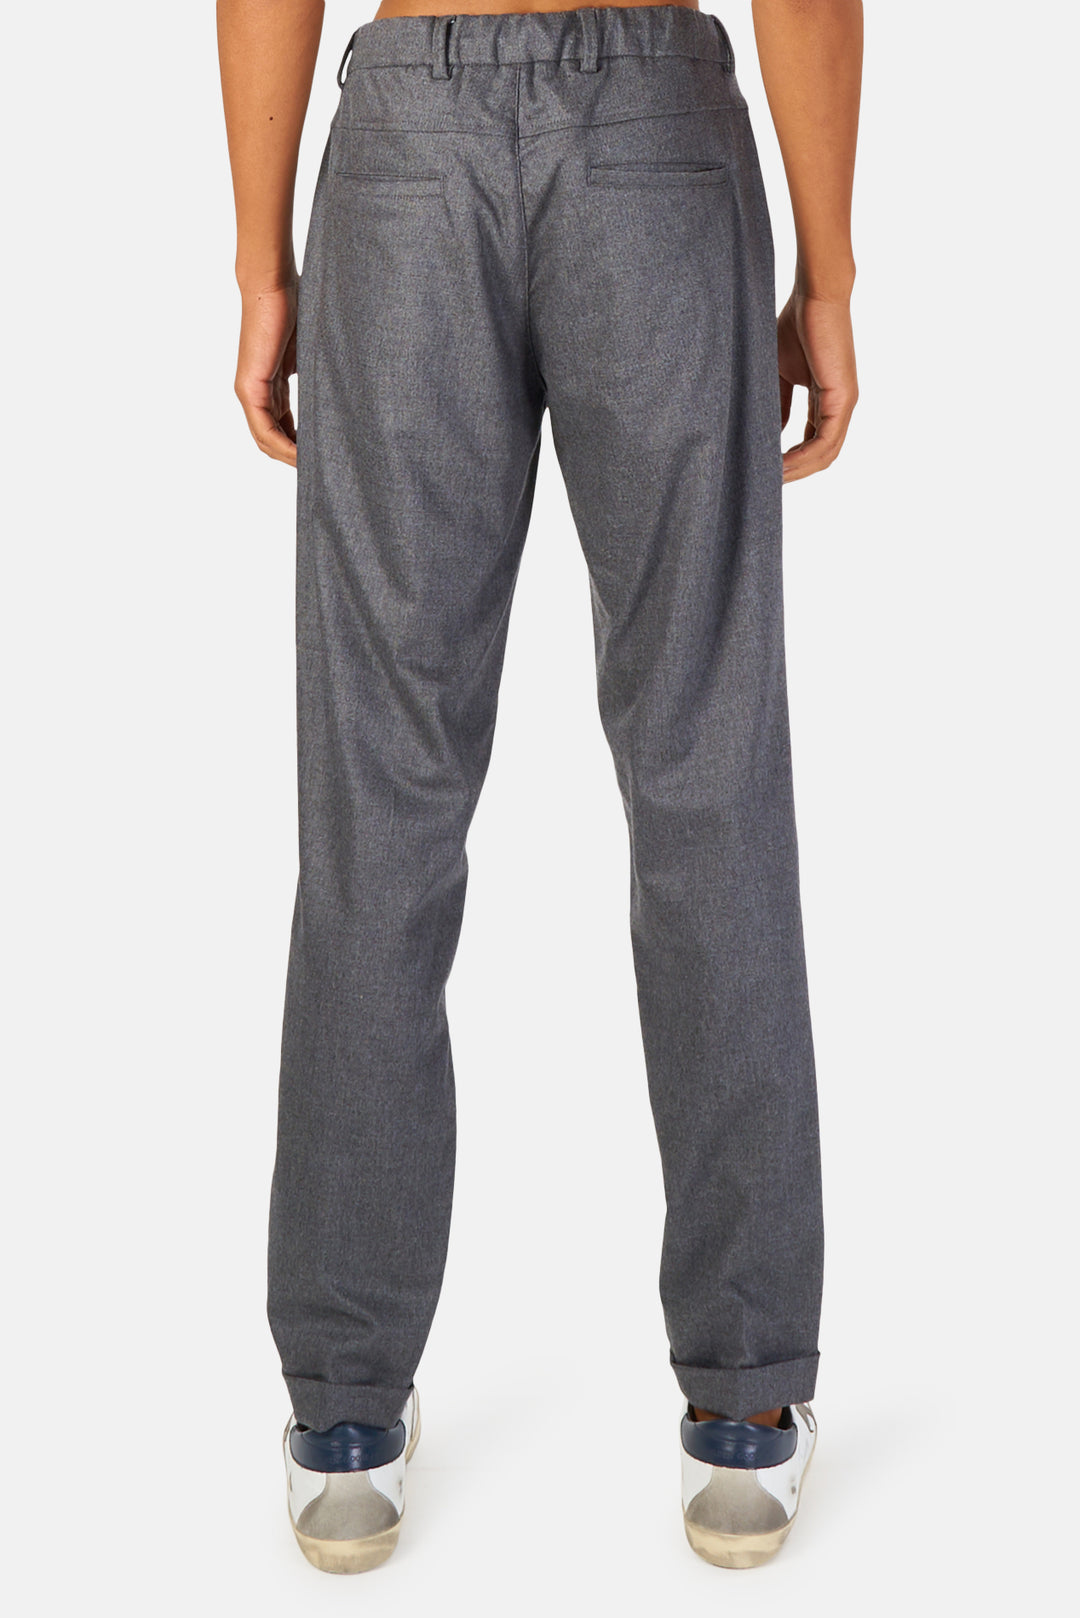 Comfort Pant Grey - blueandcream